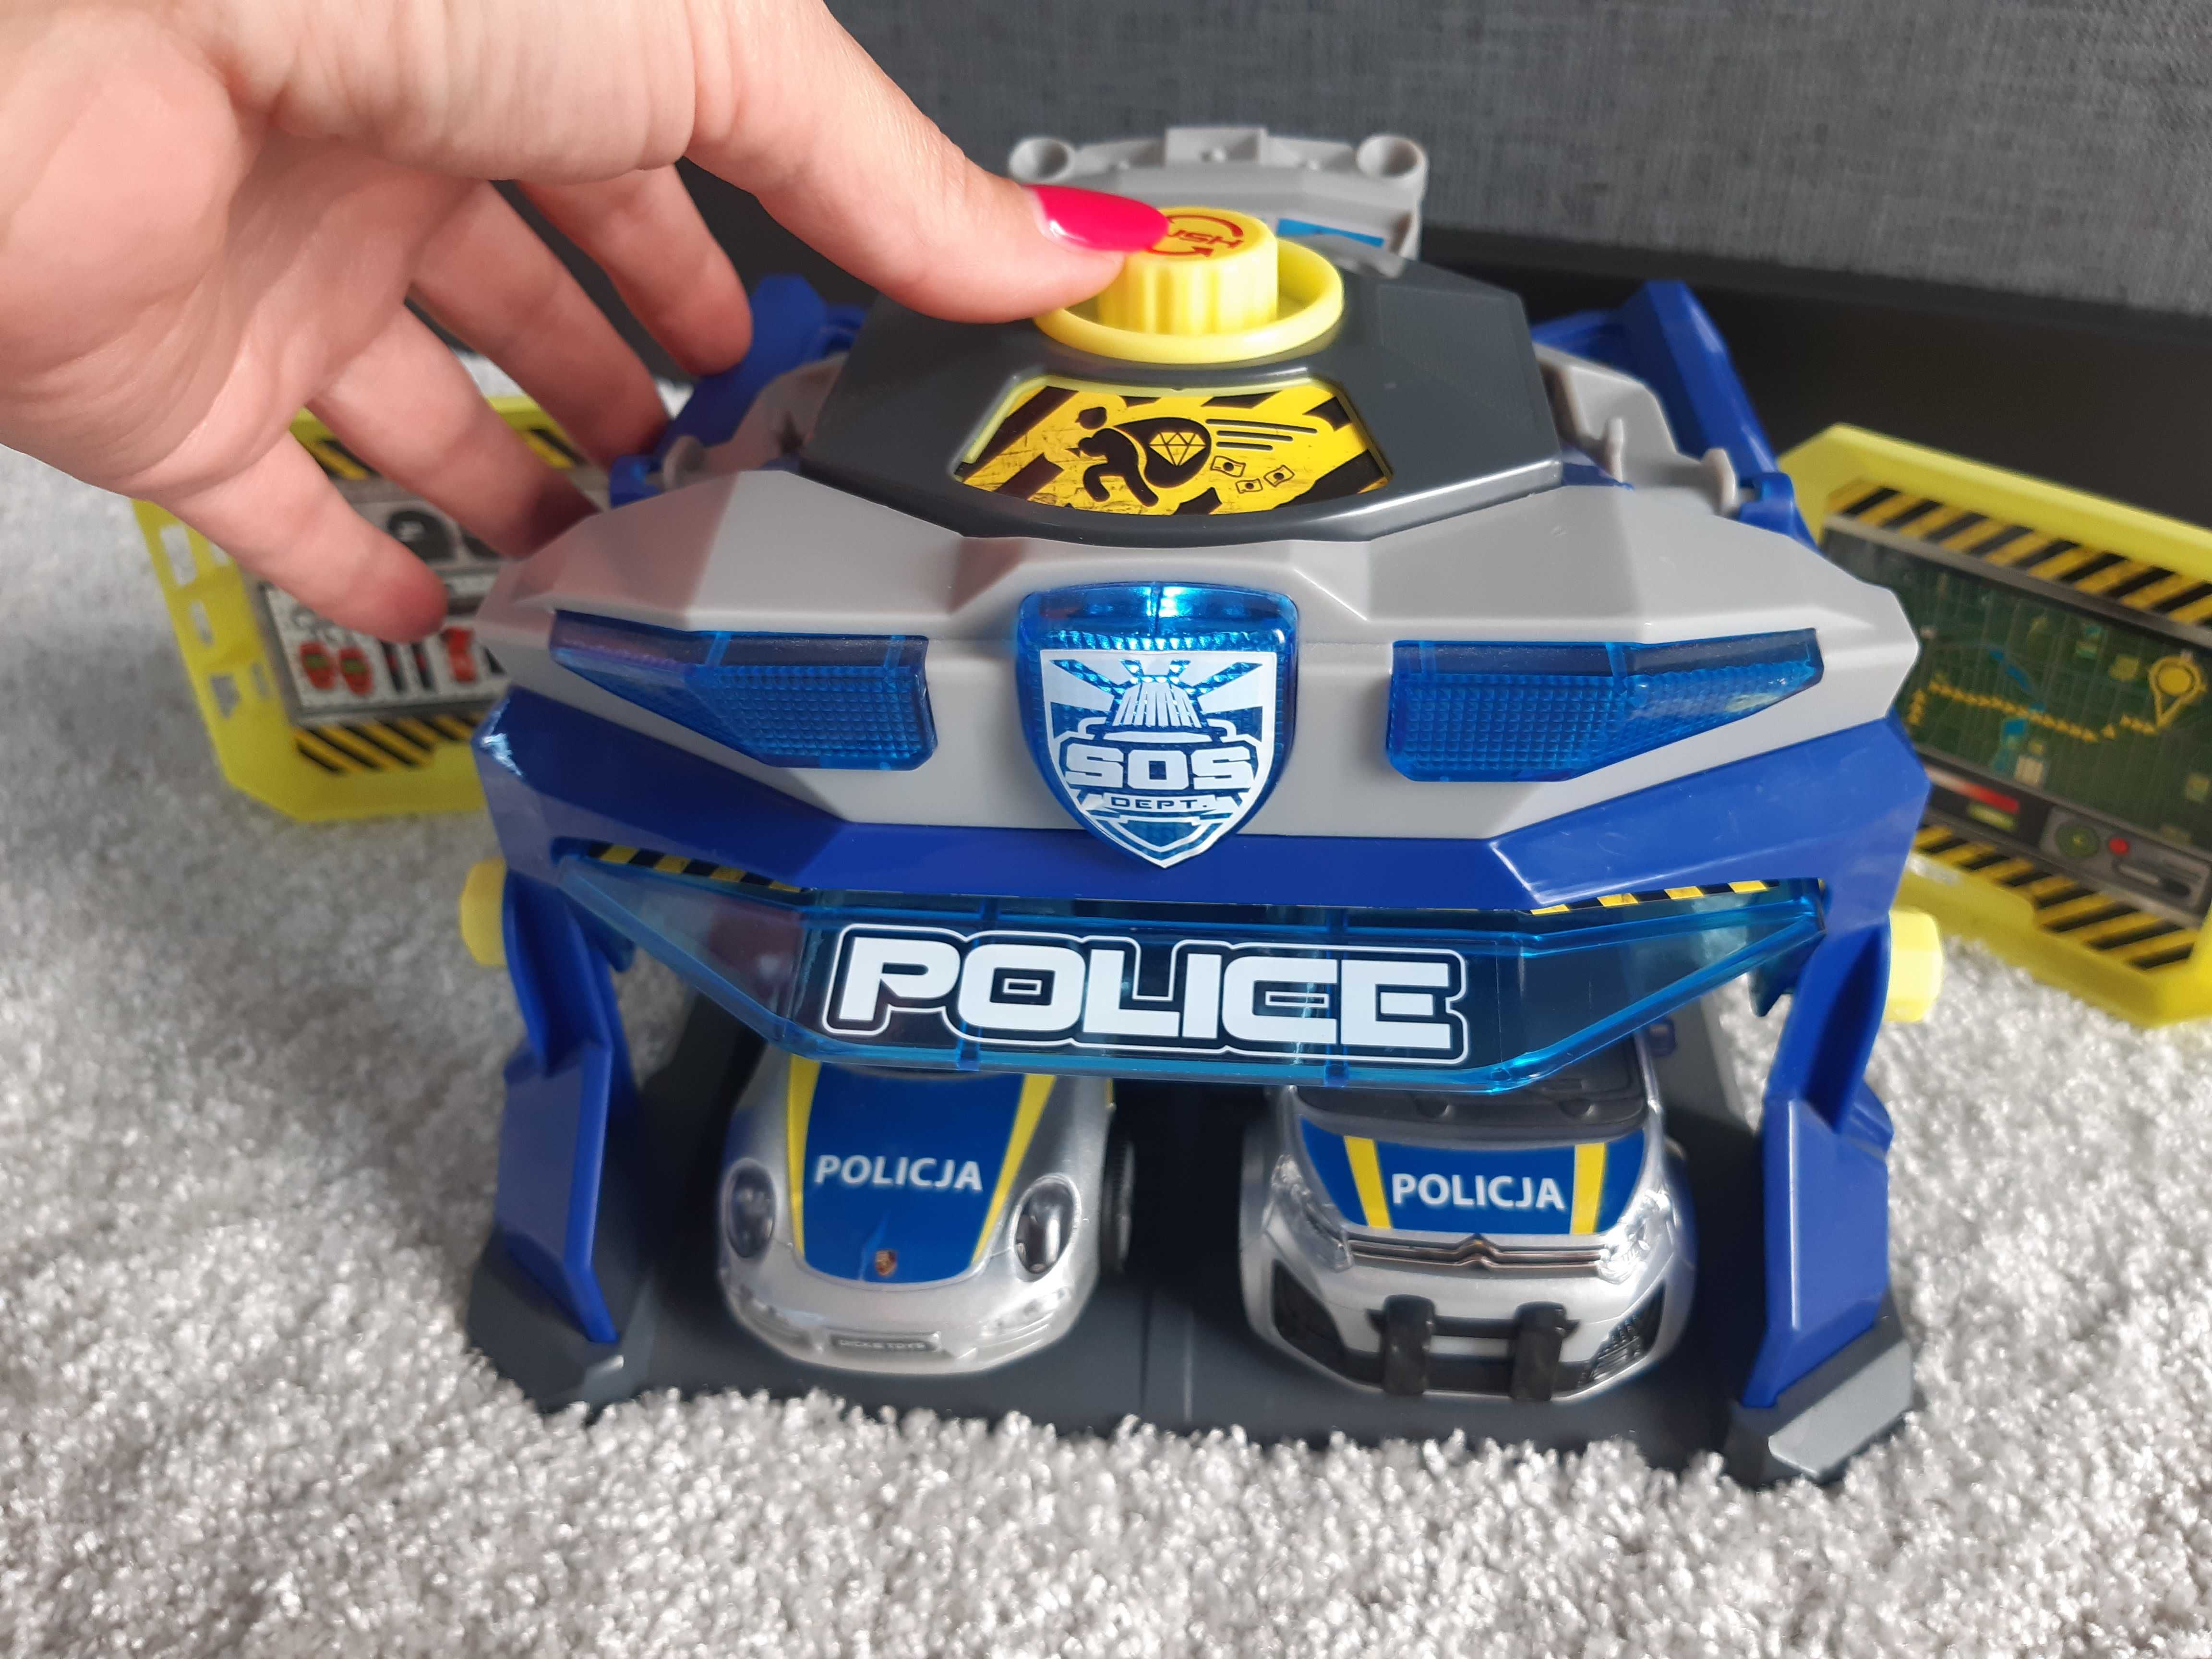 Policja - baza + 2 samochody (zabawka interaktywna)